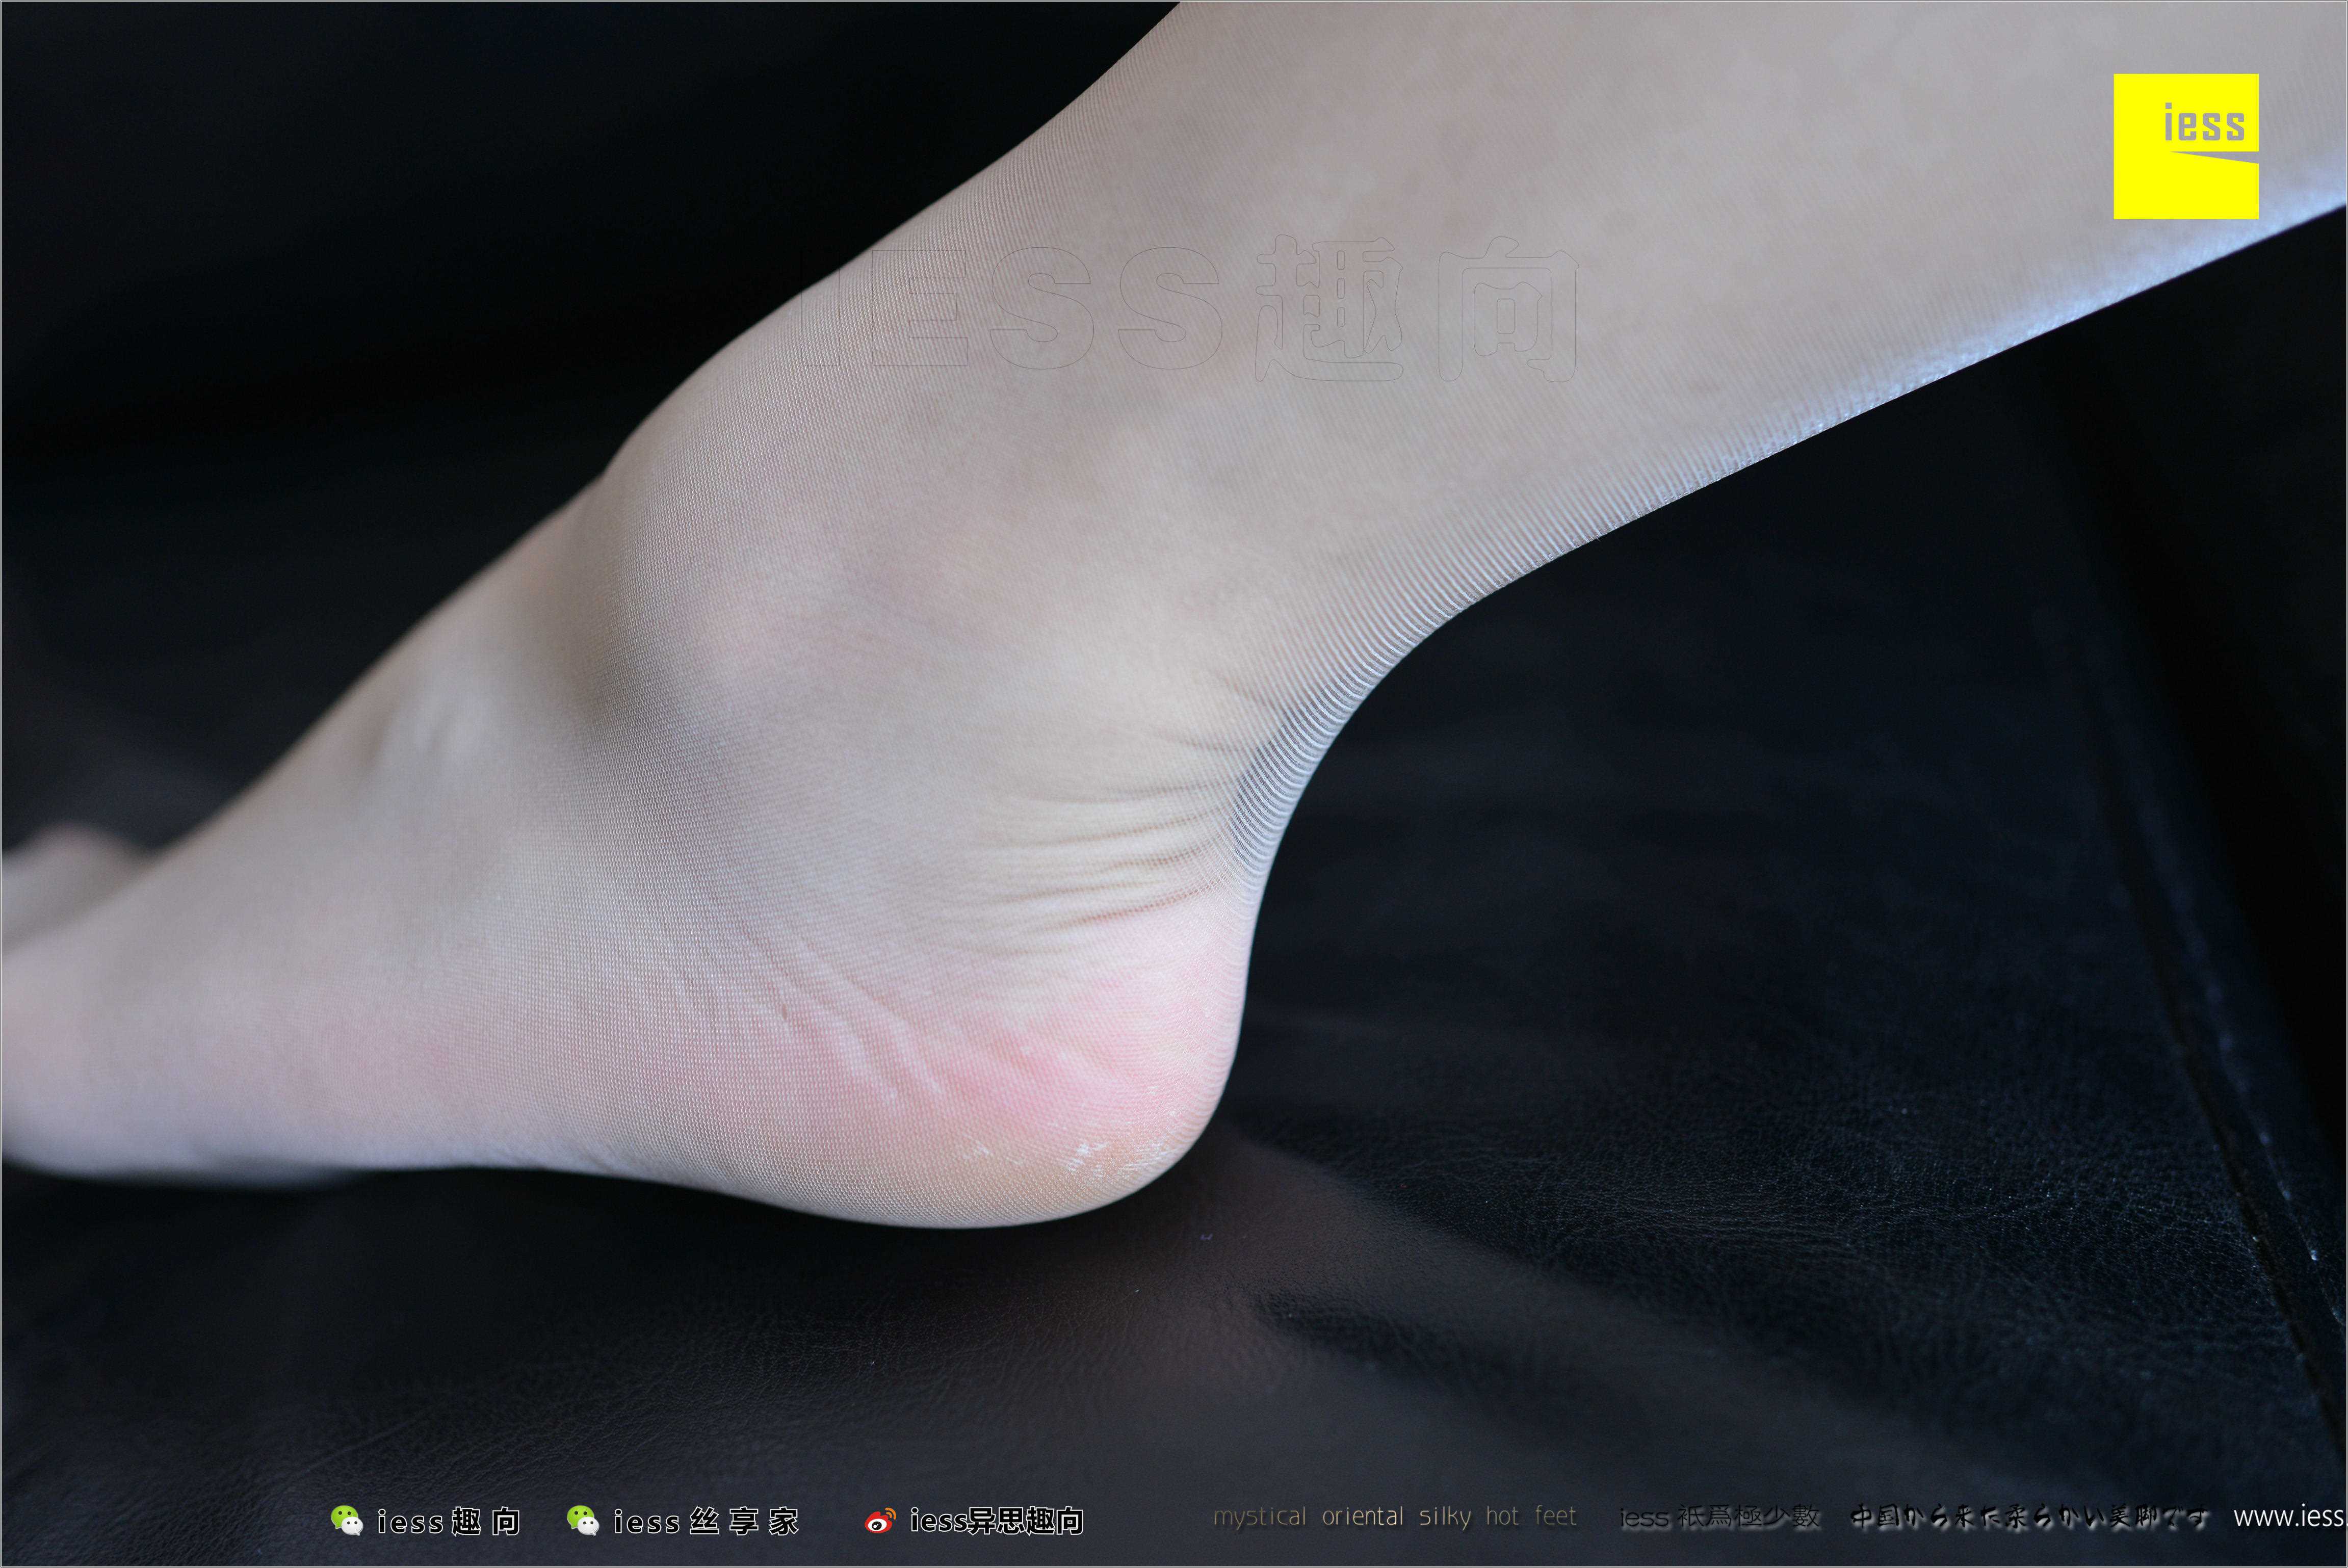 China Beauty Legs and feet 484